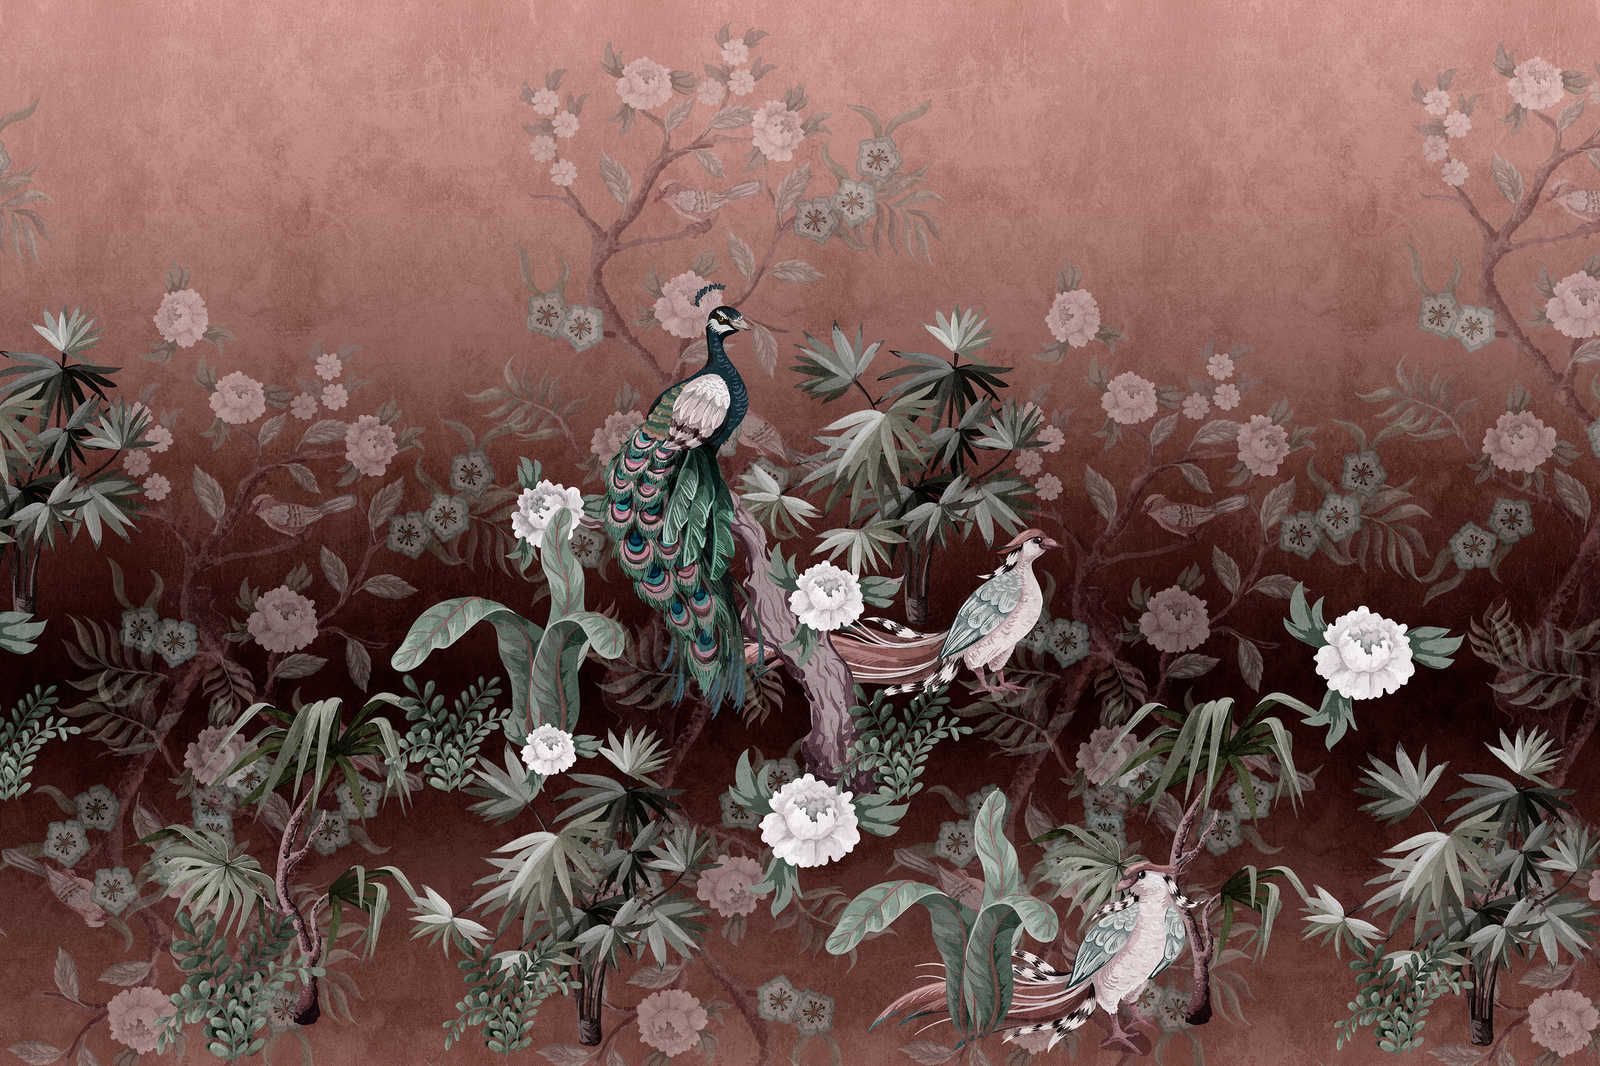             Isola dei pavoni 1 - Quadro su tela Giardino dei pavoni con fiori in rosa antica - 0,90 m x 0,60 m
        